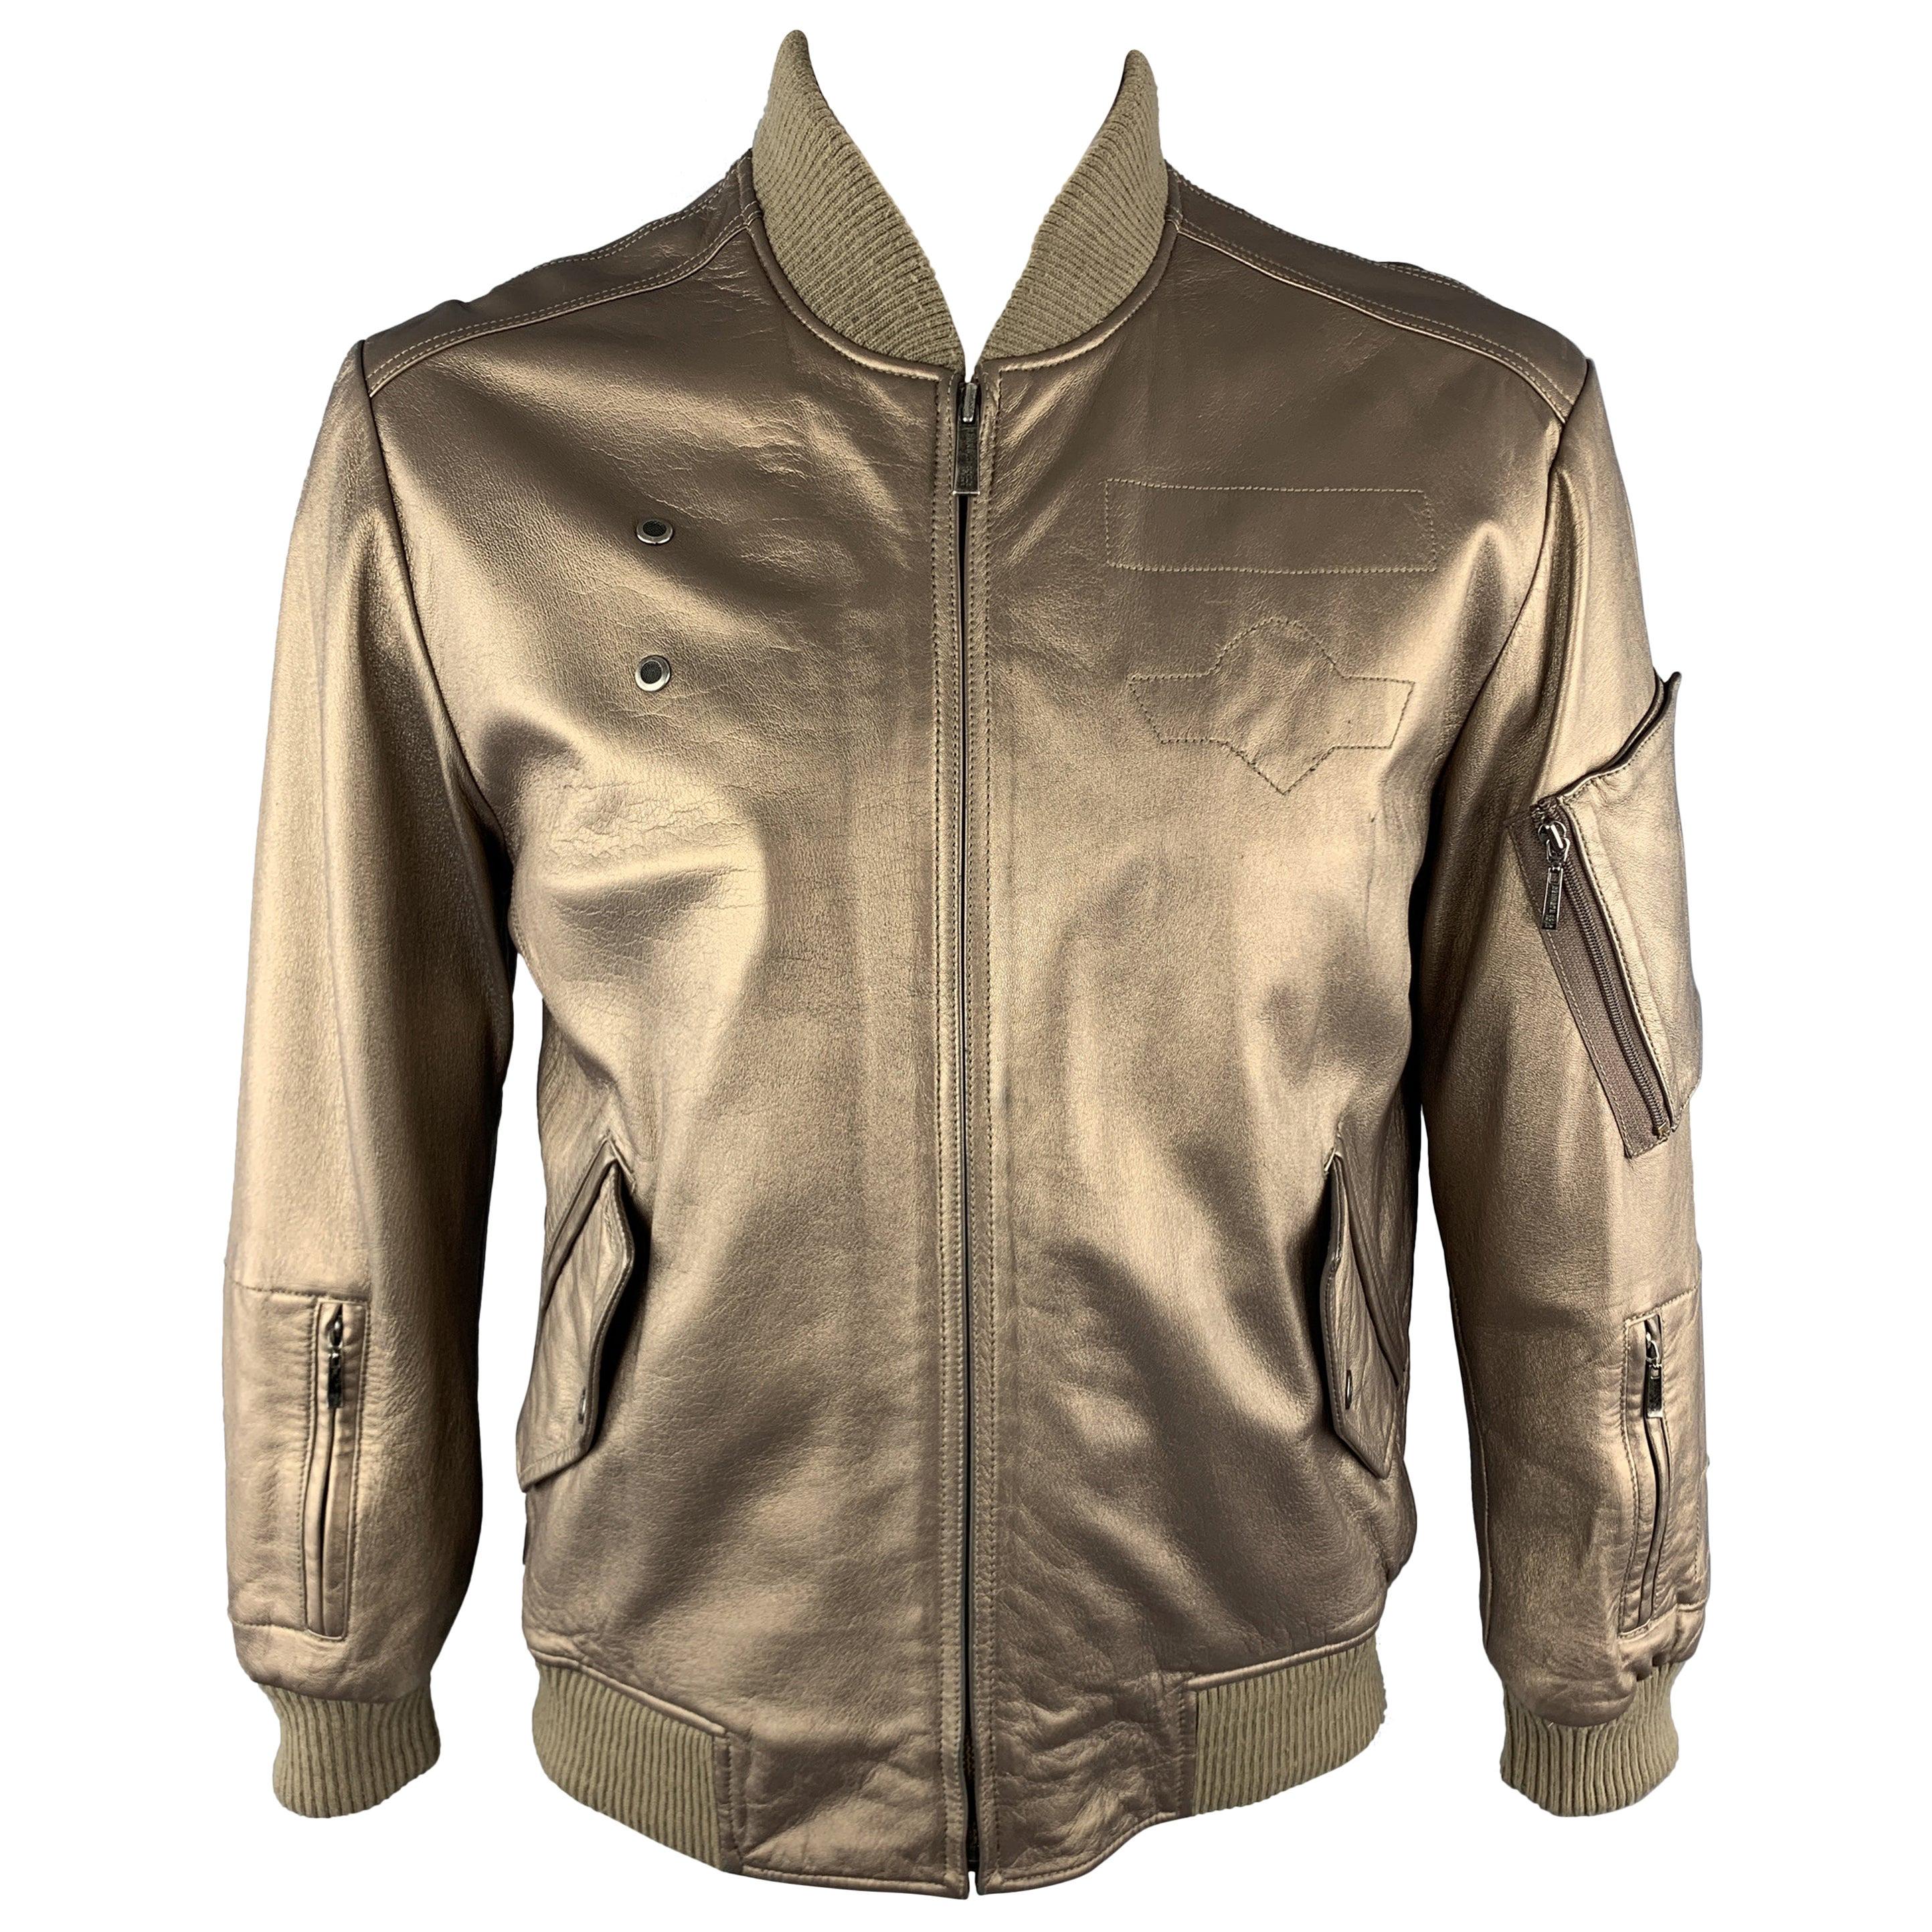 KENNETH COLE 42 Gold Metallic Leather Zip Up Vintage Bomber Style Jacket